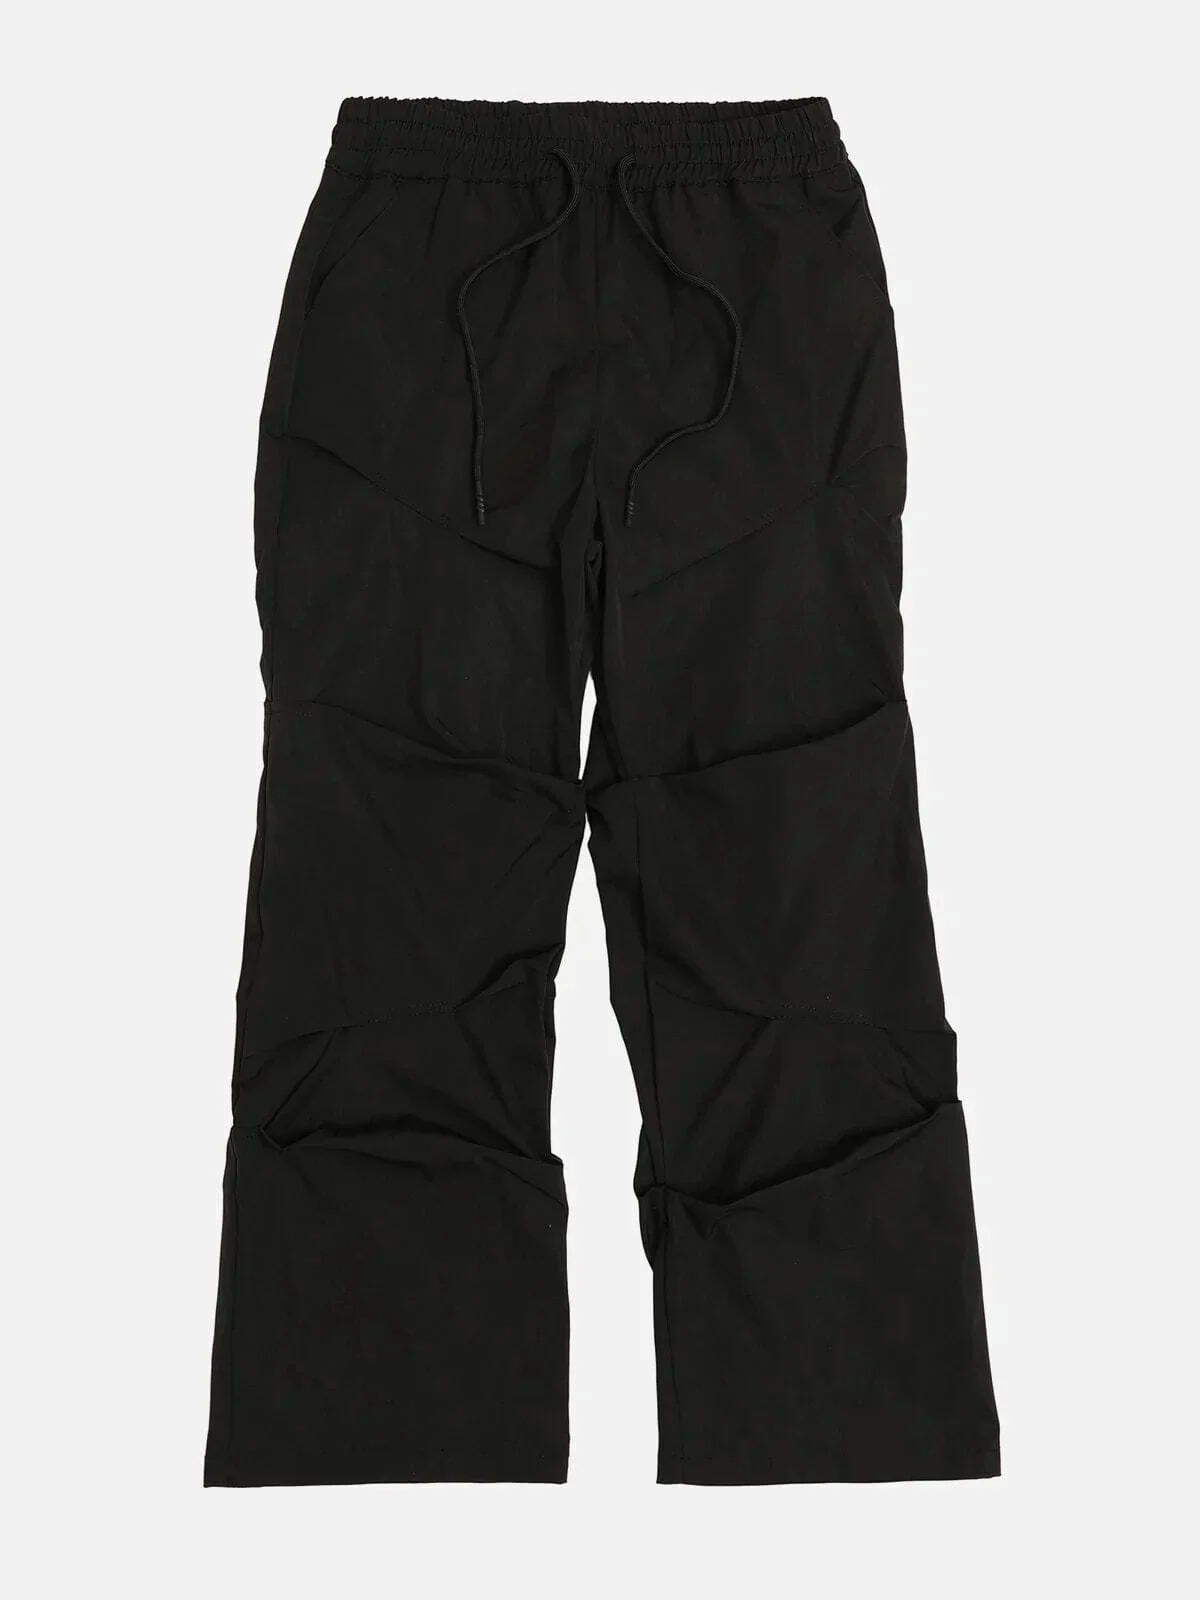 layered pleated pants edgy & versatile streetwear 4586